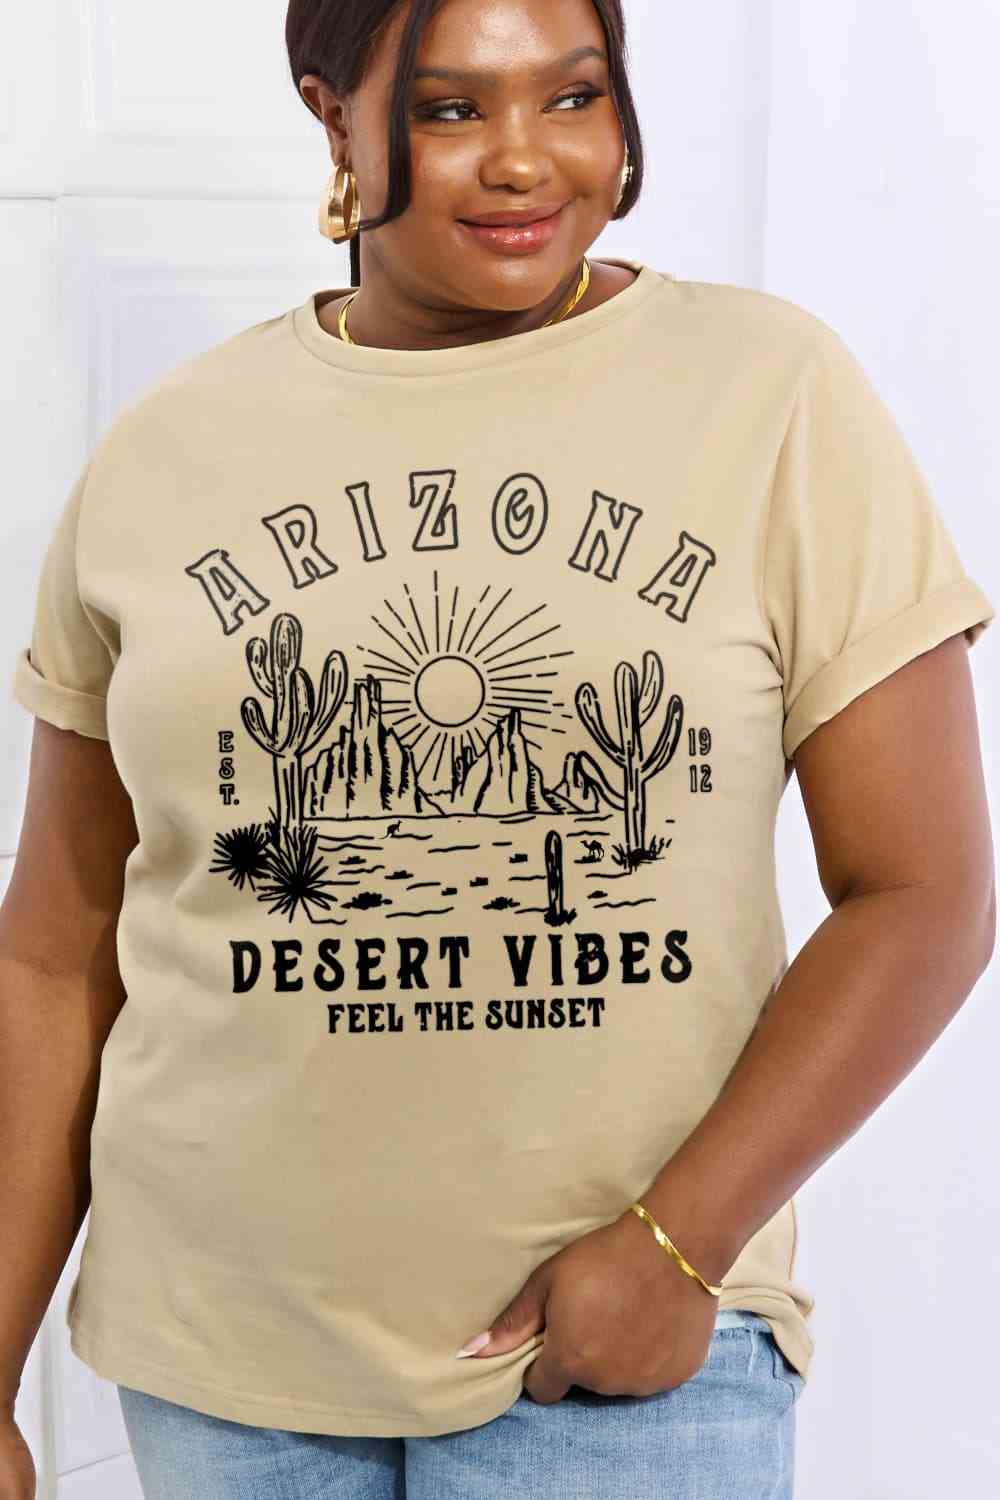 ARIZONA DESERT VIBES FEEL THE SUNSET Graphic Cotton Tee - T-Shirts - Shirts & Tops - 1 - 2024